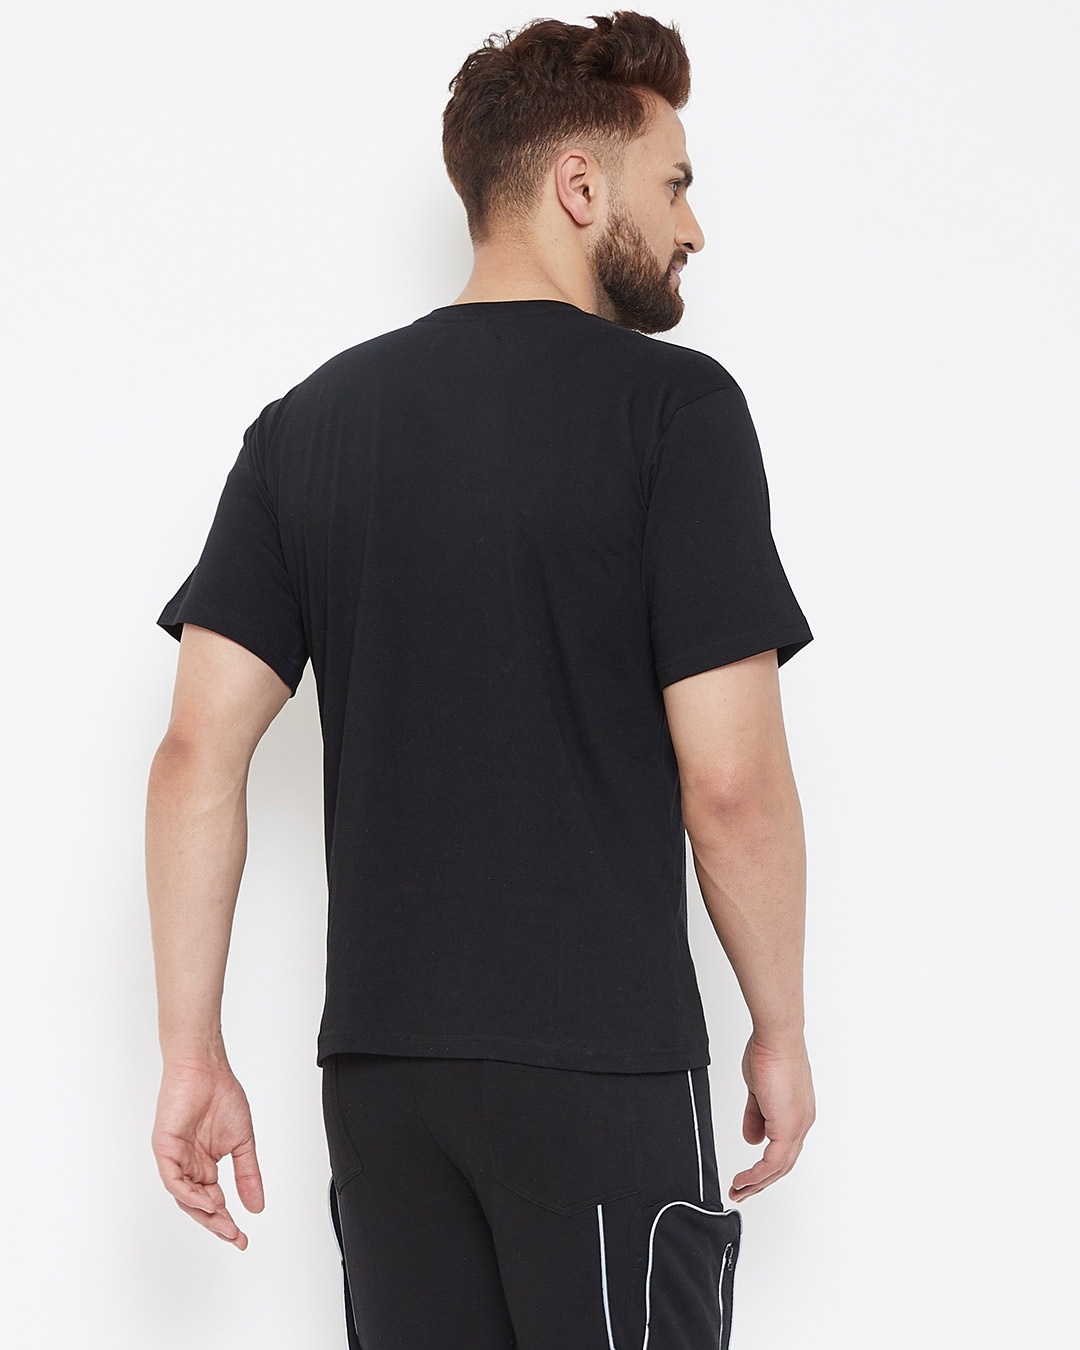 Shop Black Chest Pocket Reflective Piping T-Shirt-Design